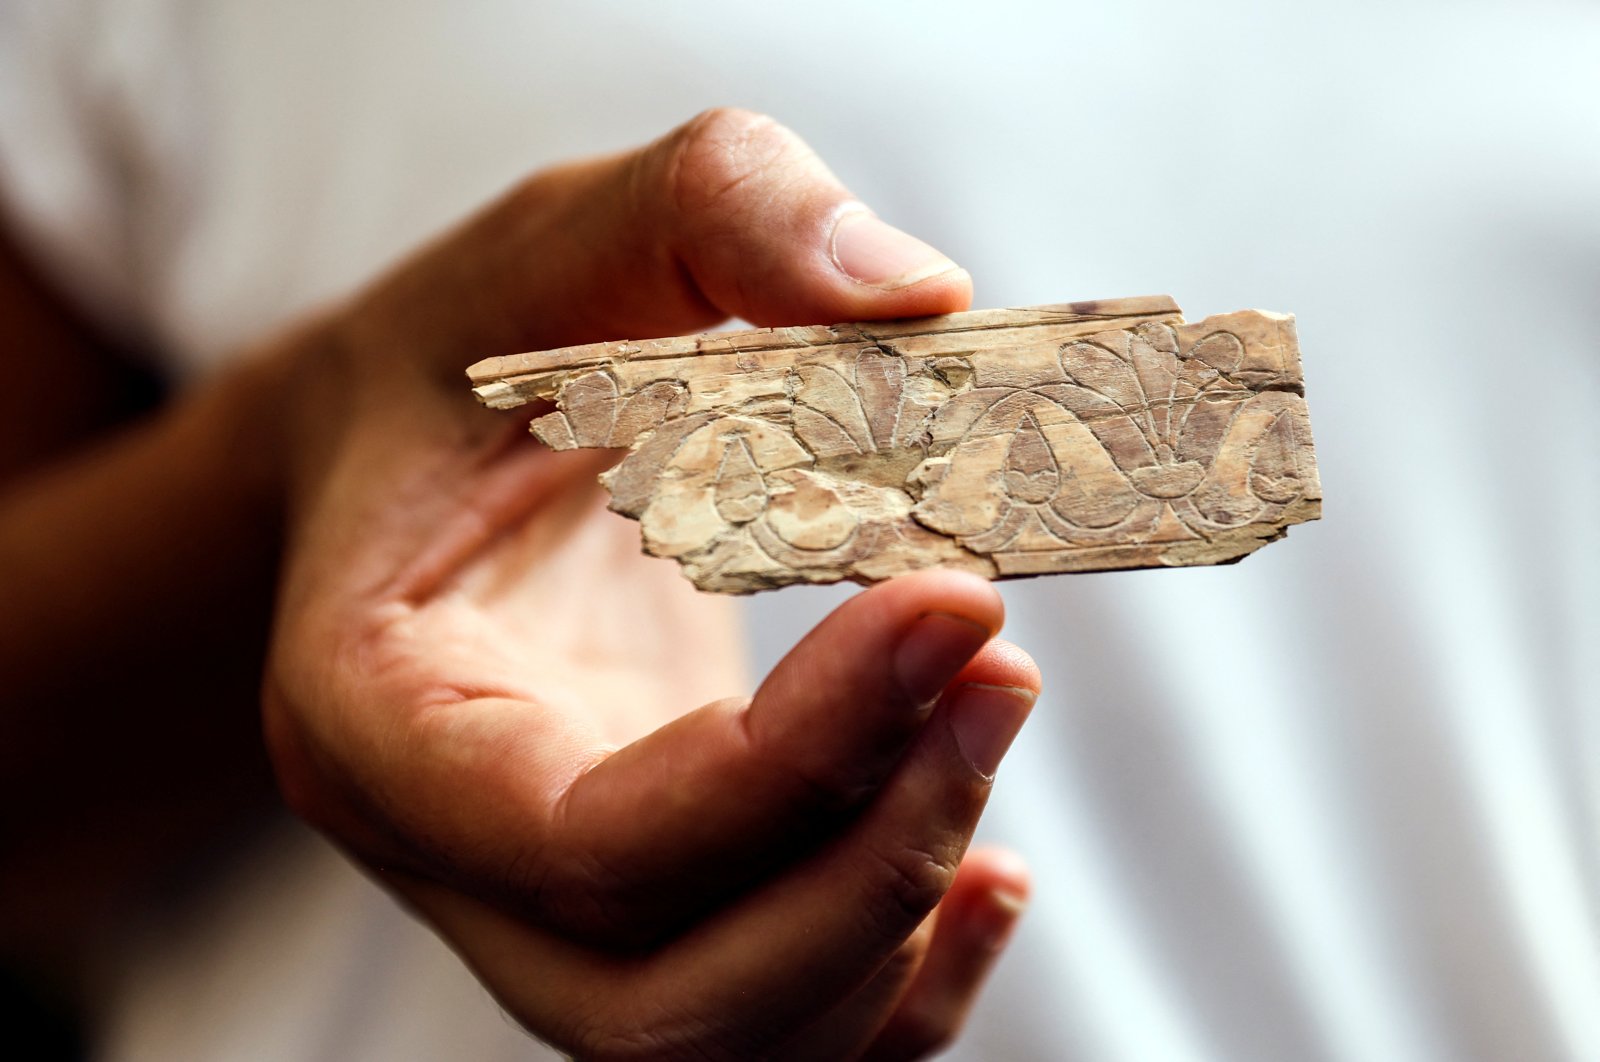 Para peneliti menemukan plakat gading Zaman Besi di rumah kuno Yerusalem